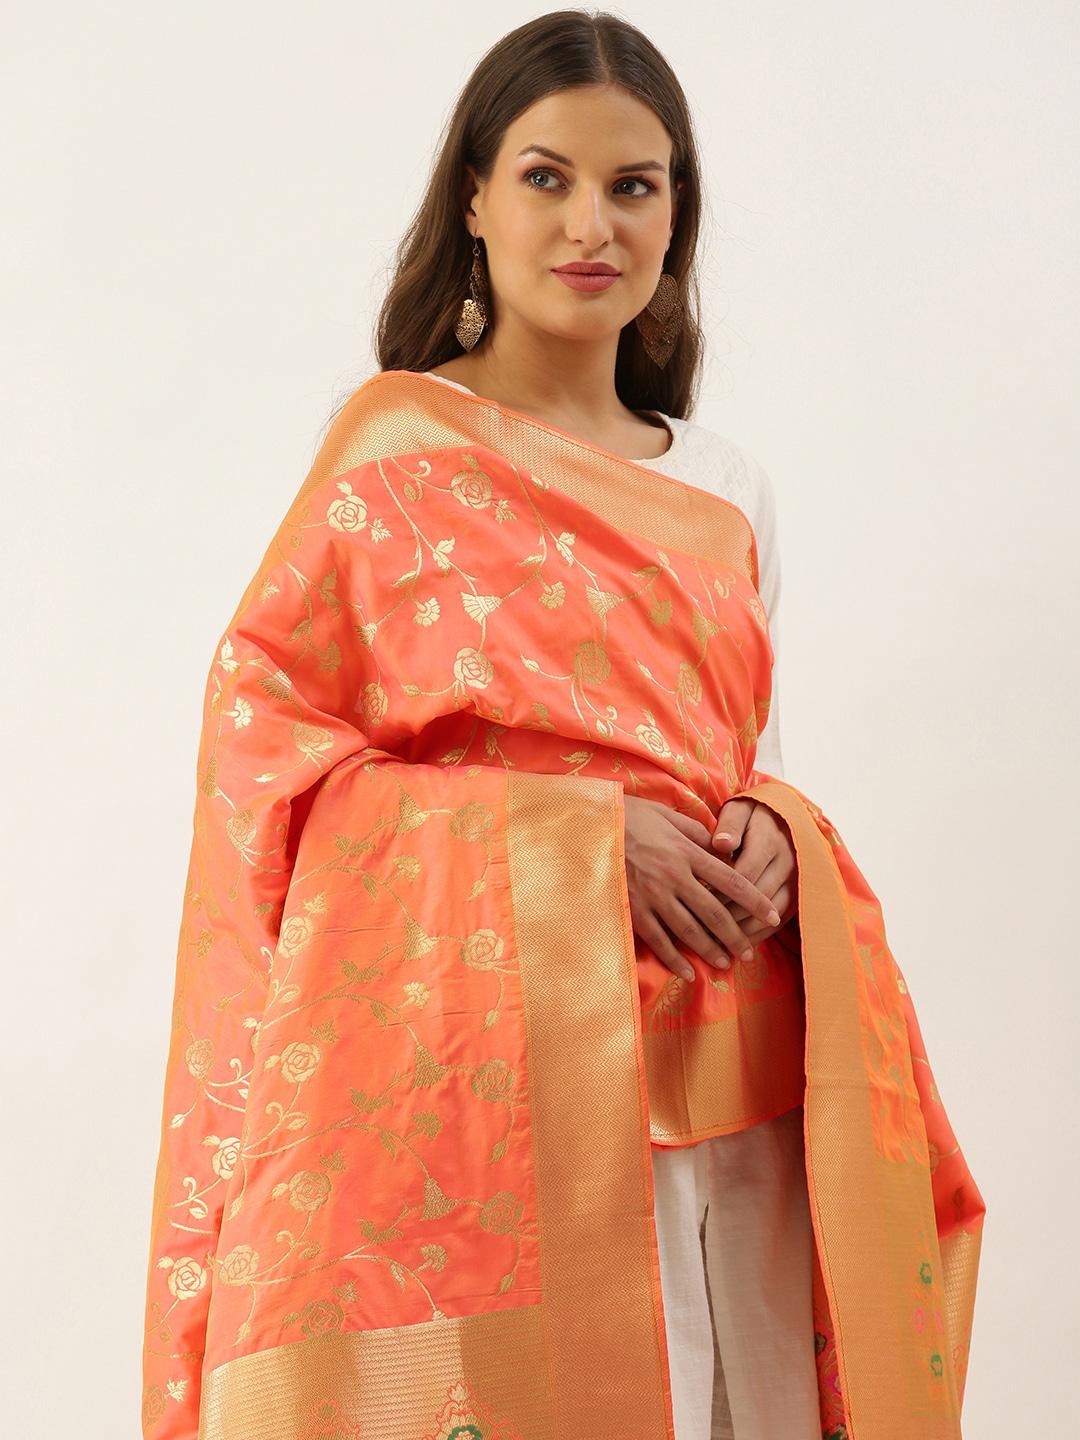 SANGAM PRINTS Peach-Coloured &Golden Ethnic Motifs Woven Design Dupatta with Tassel Detail